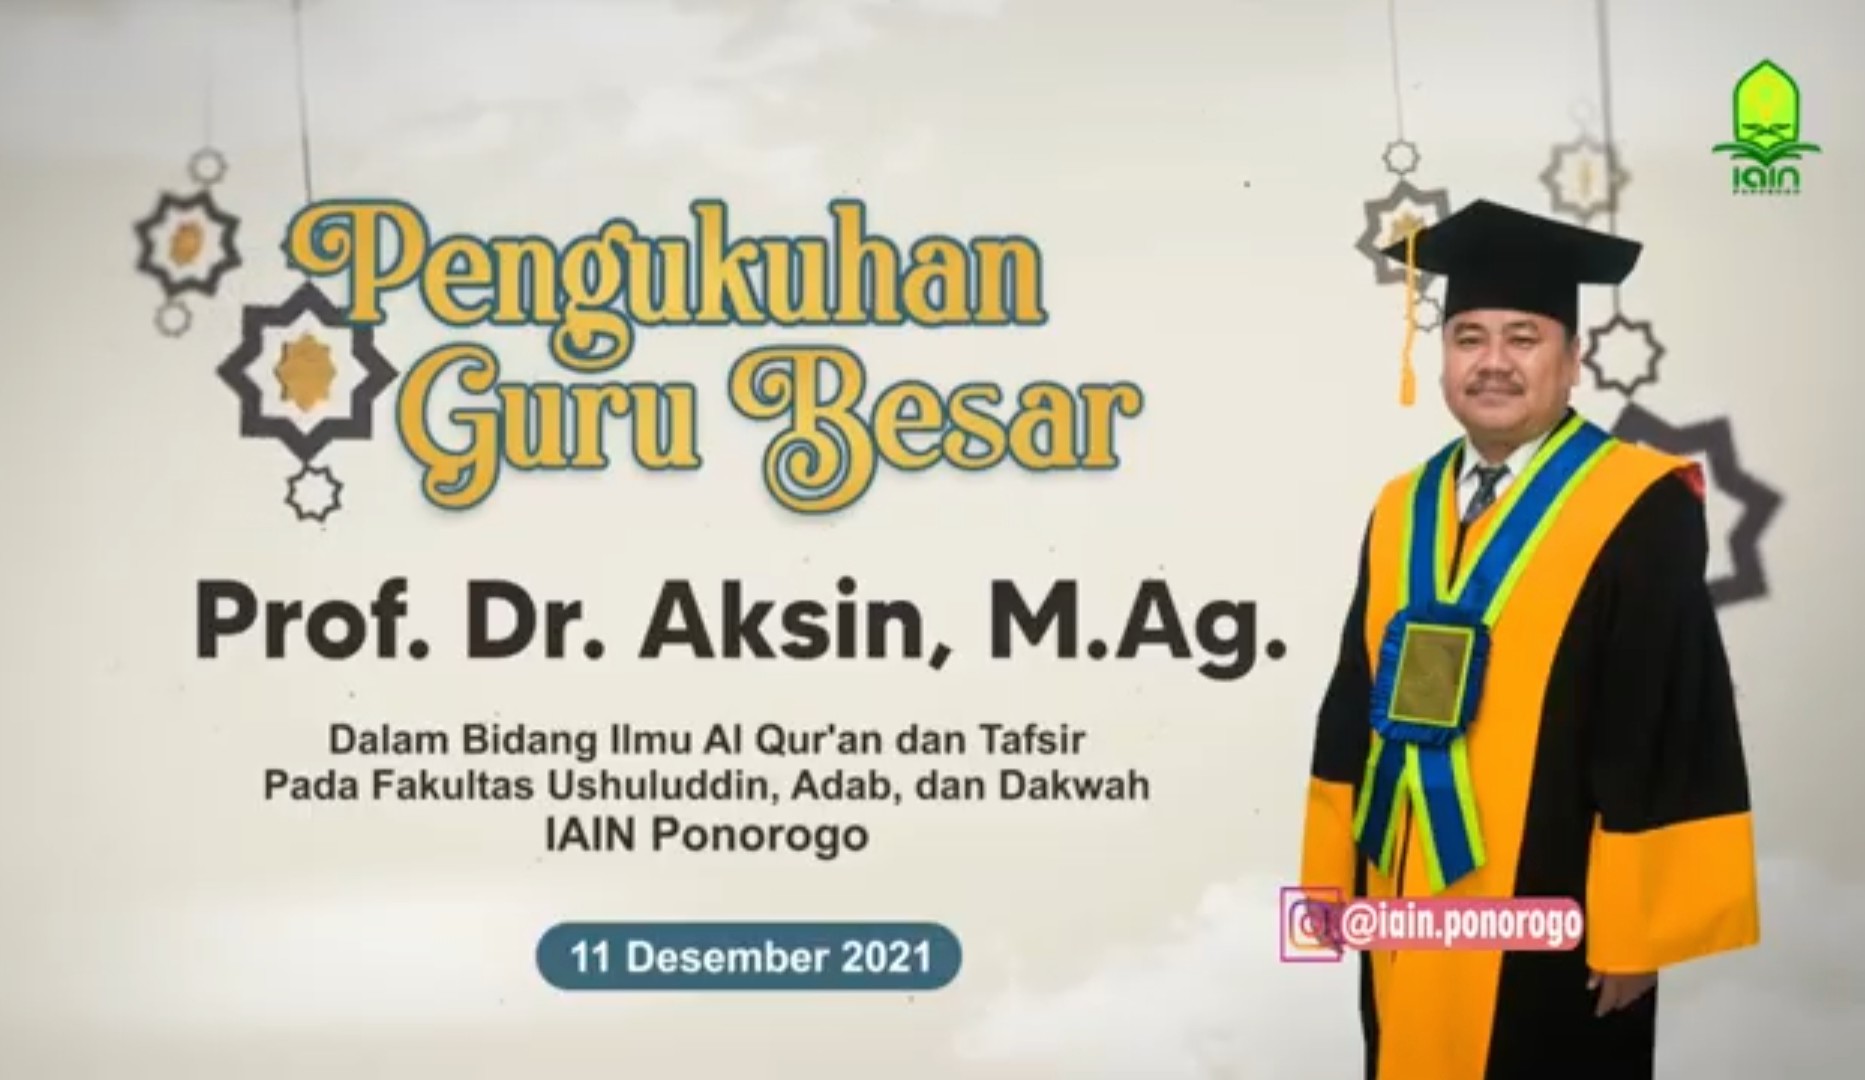 Pengukuhan Guru Besar, Prof. Dr. Aksin, S.H., M.Ag.